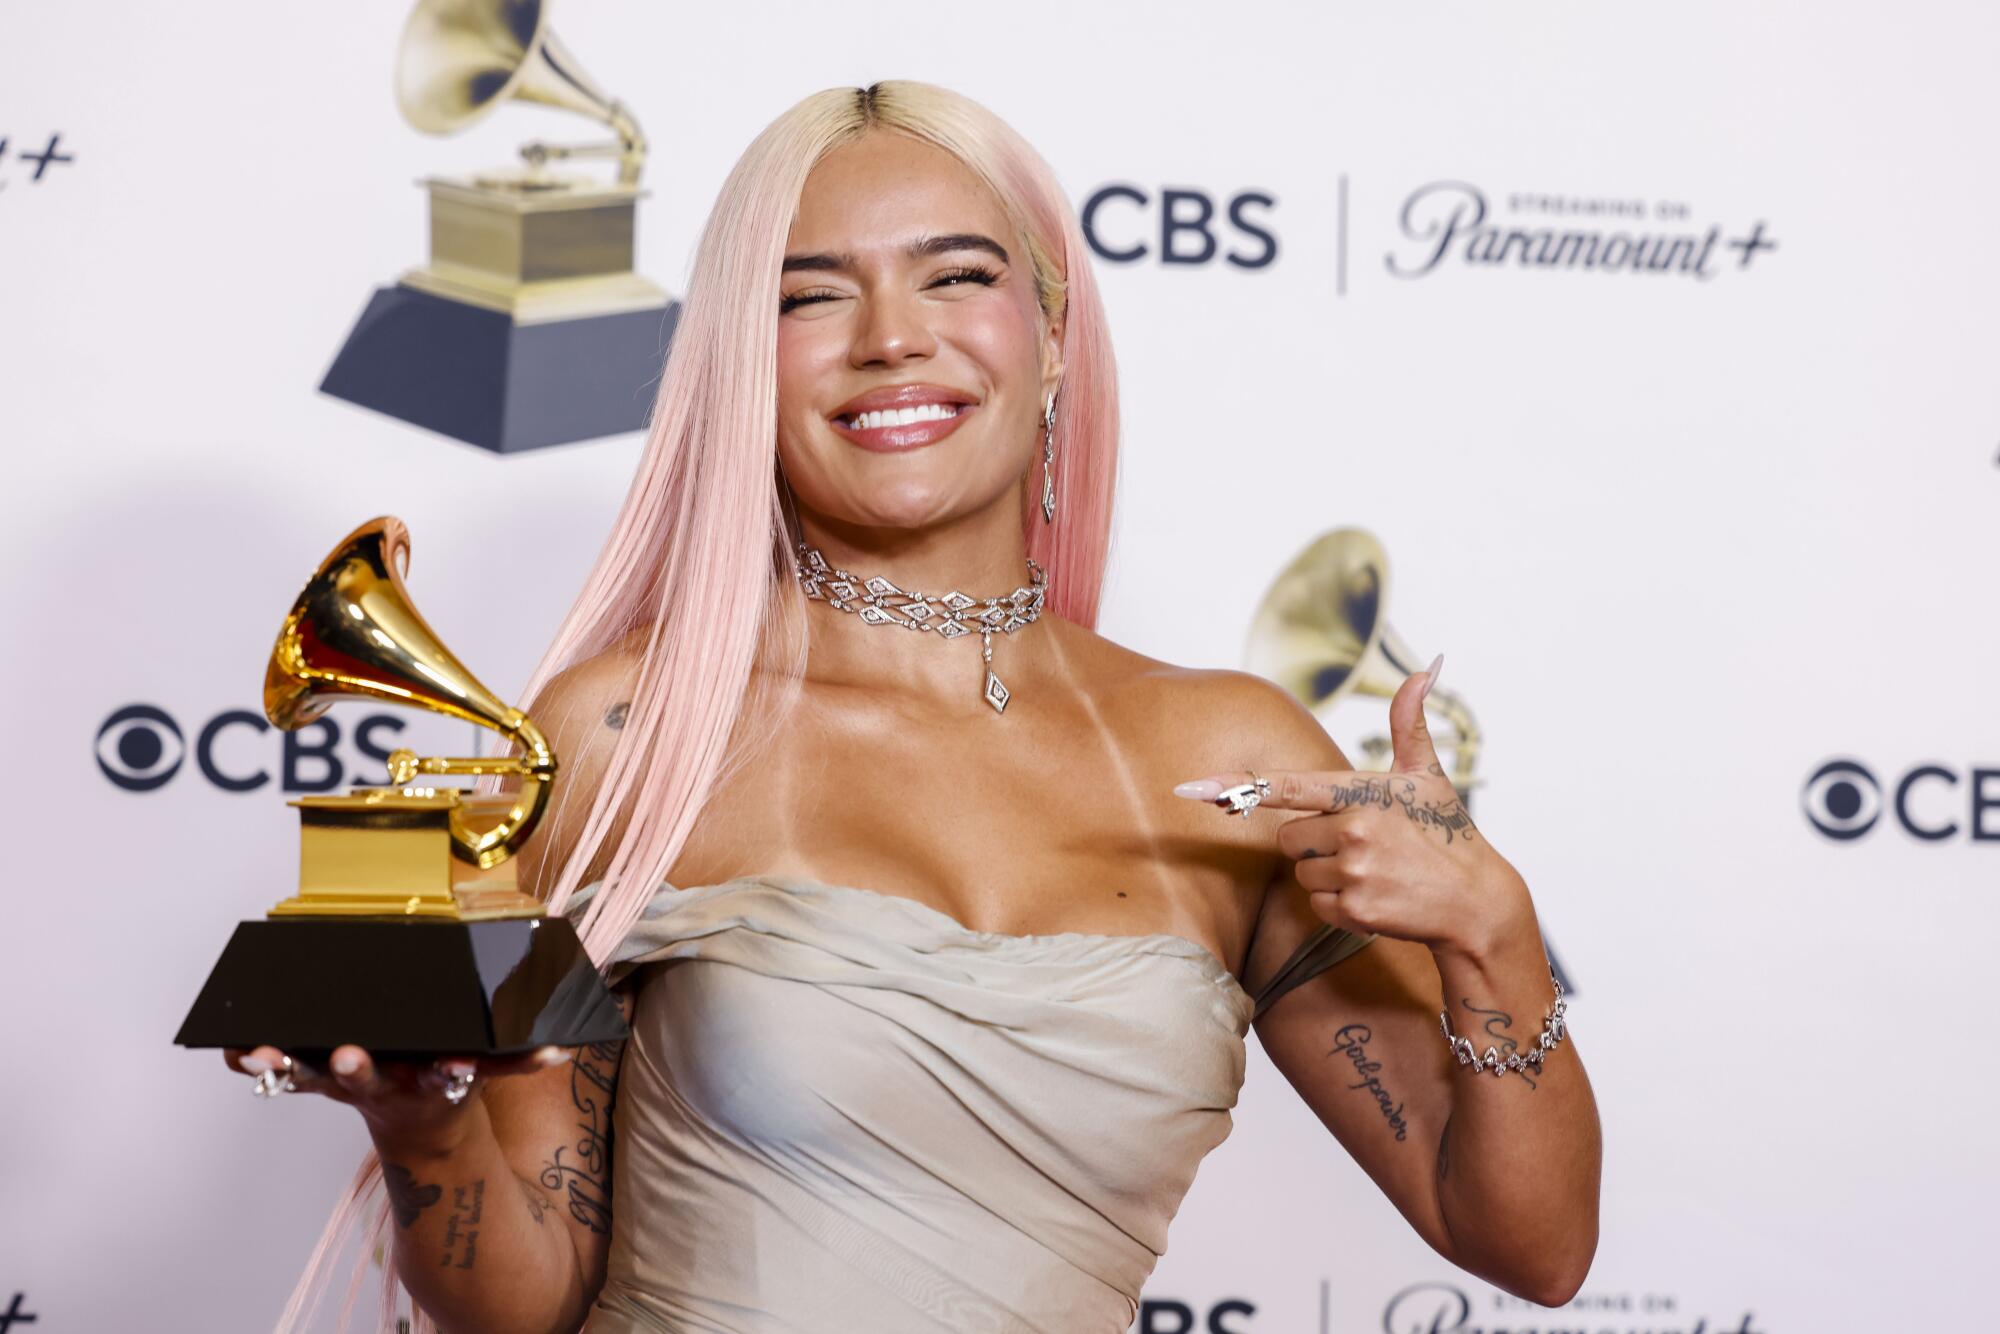 Karol G ganá el Grammy por su álbum "Manana Sera Bonito".